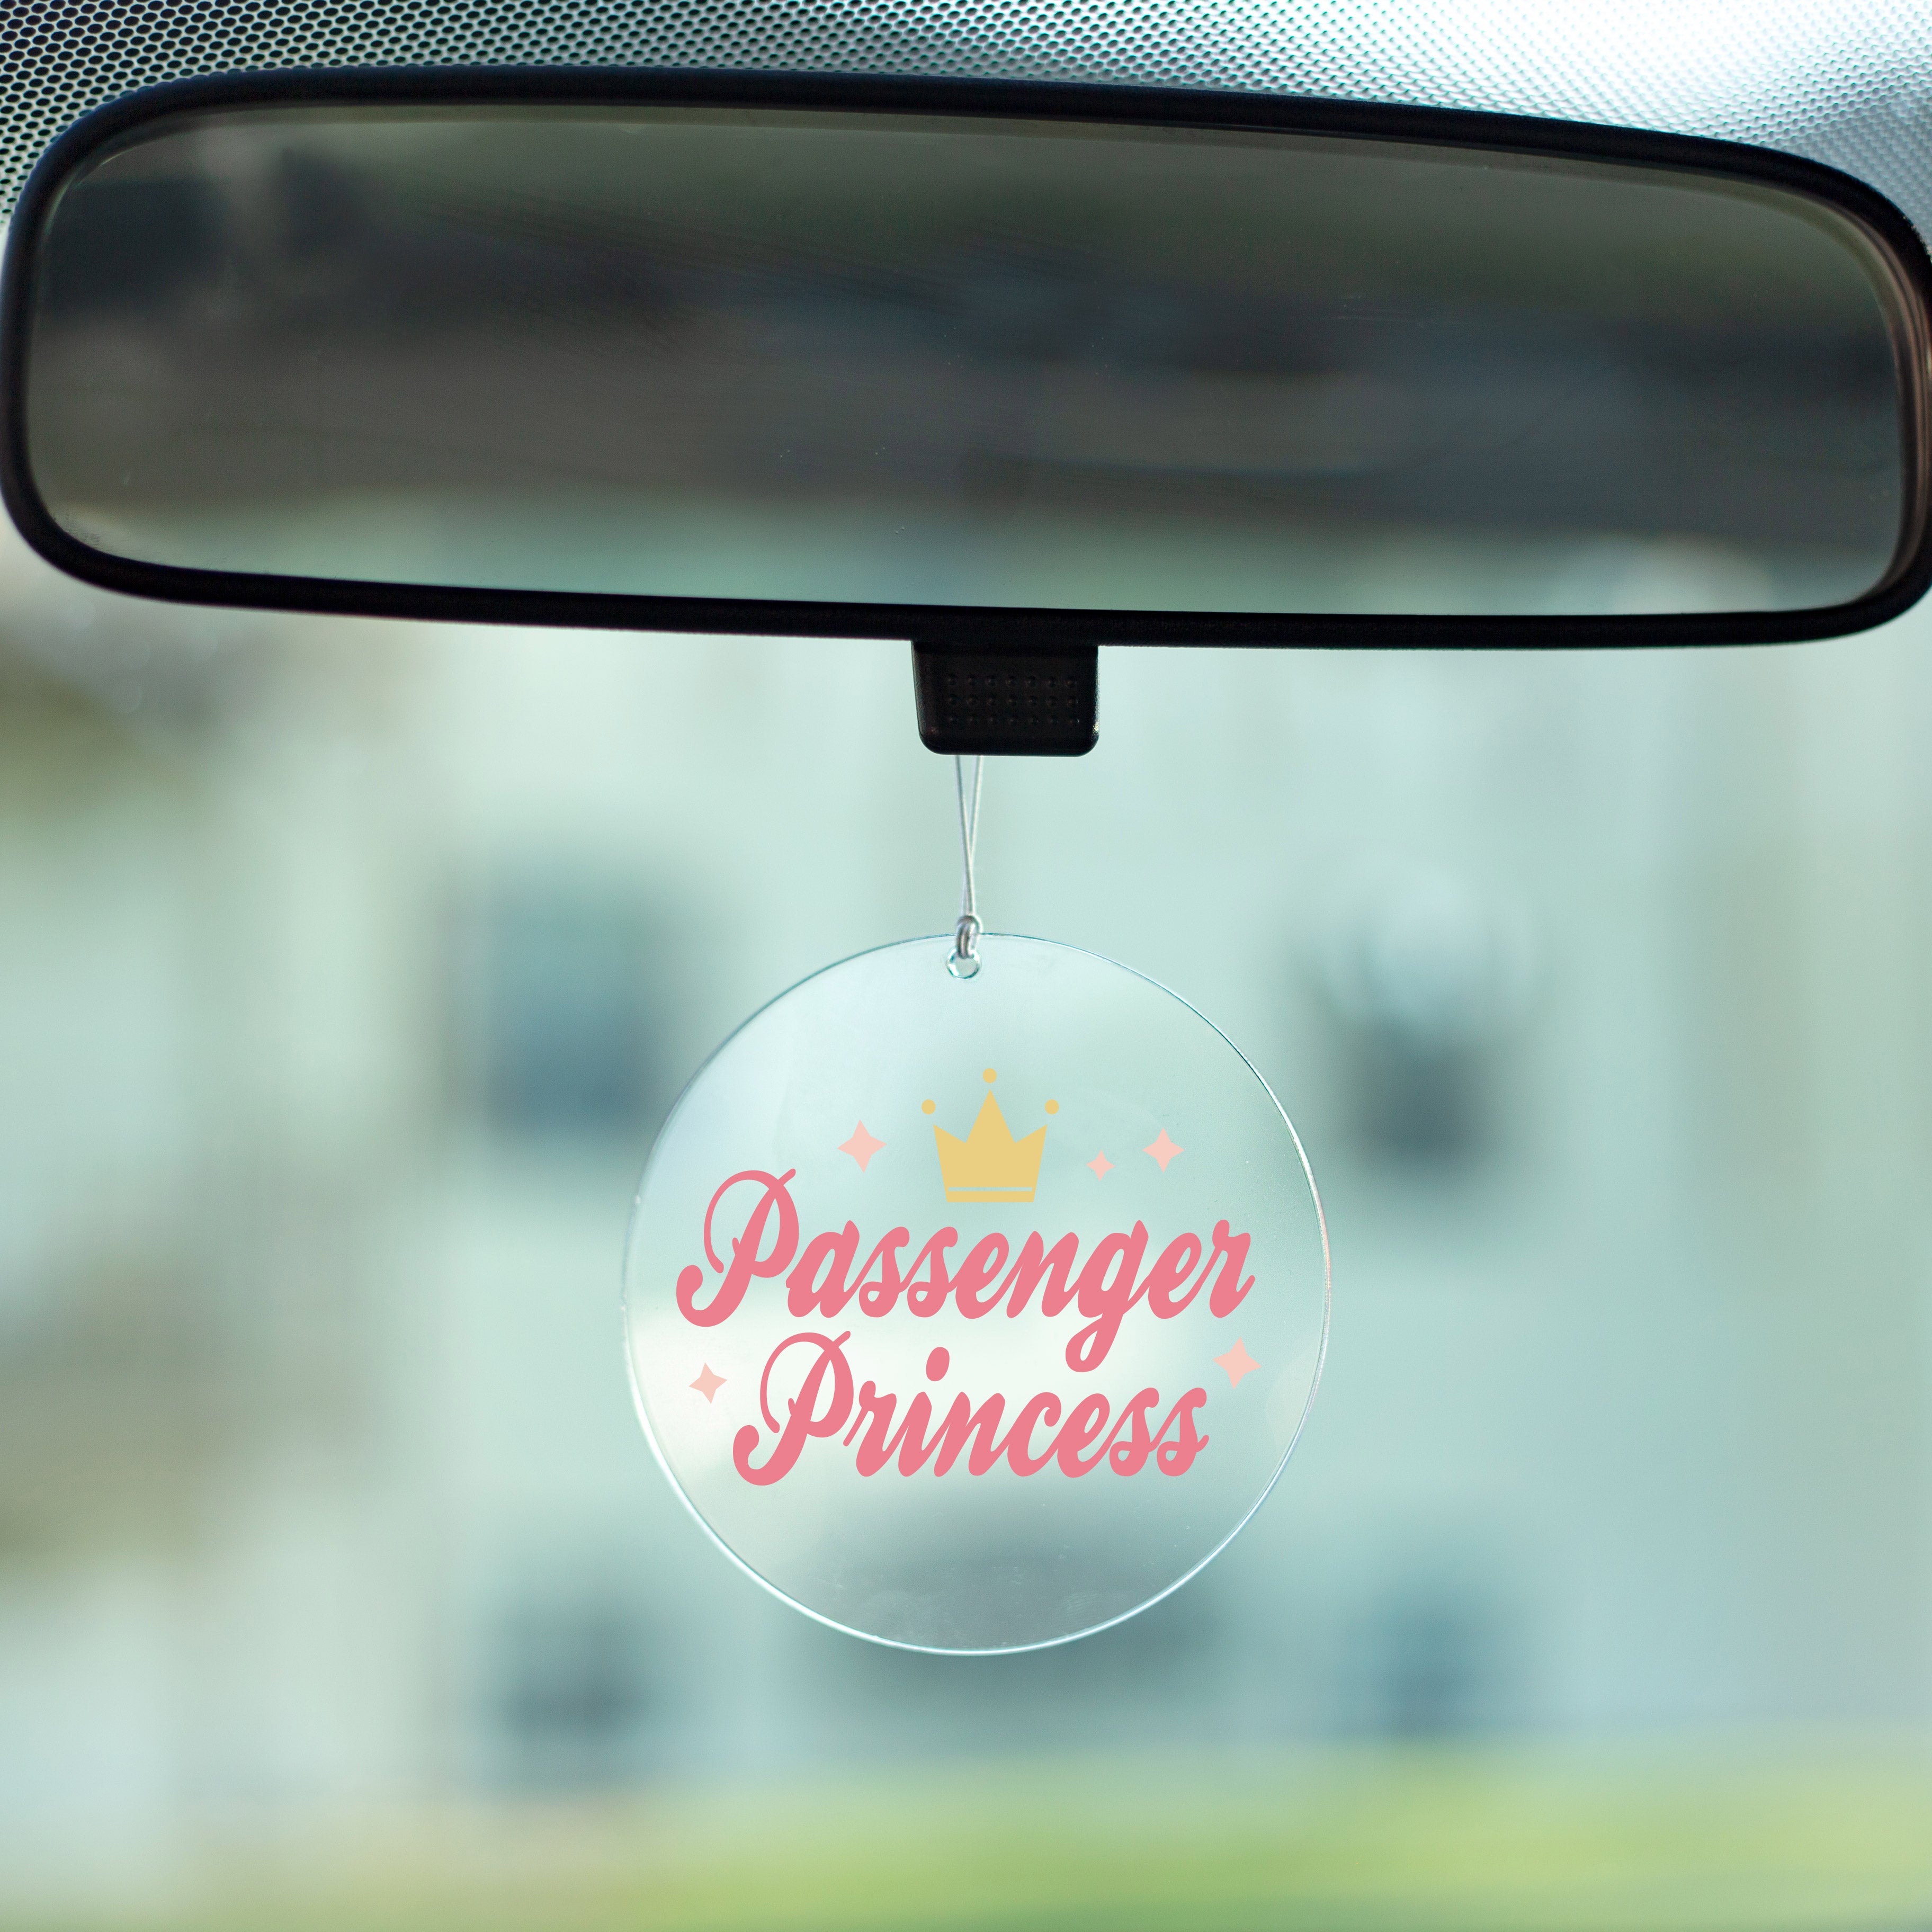 Passenger Princess Rearview Mirror Hang - Femfetti